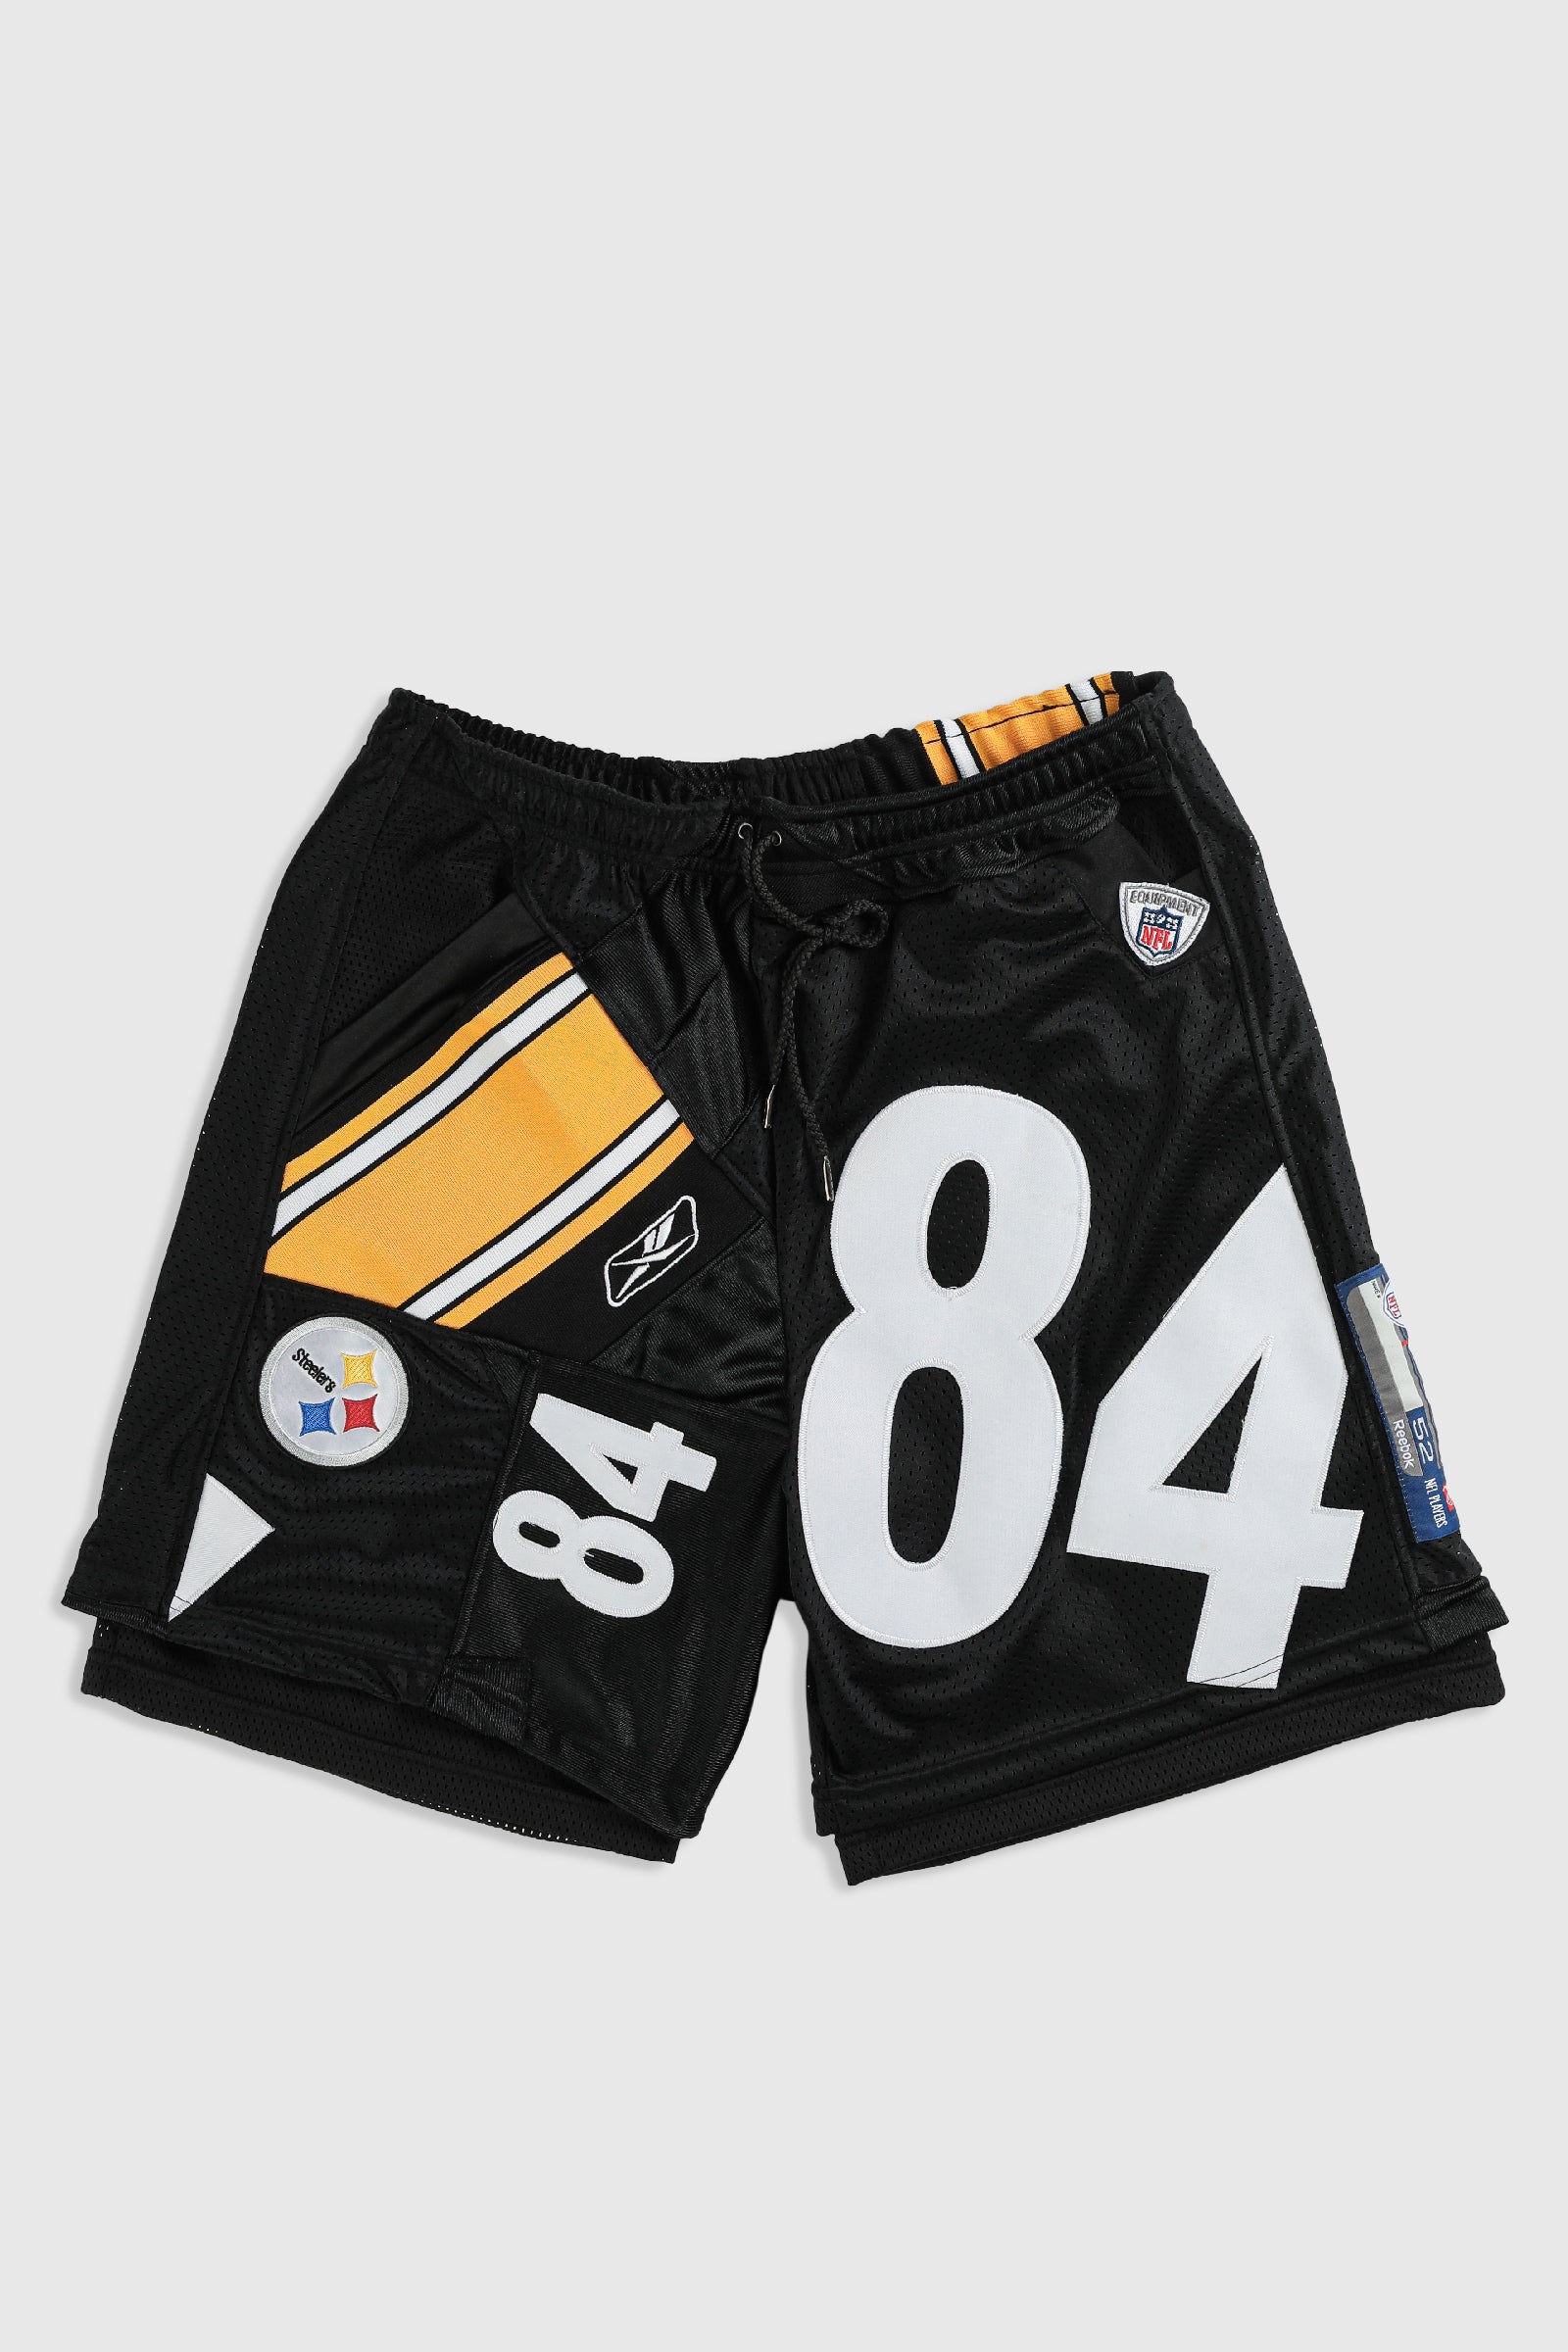 Unisex Rework Steelers NFL Jersey Shorts - L – Frankie Collective